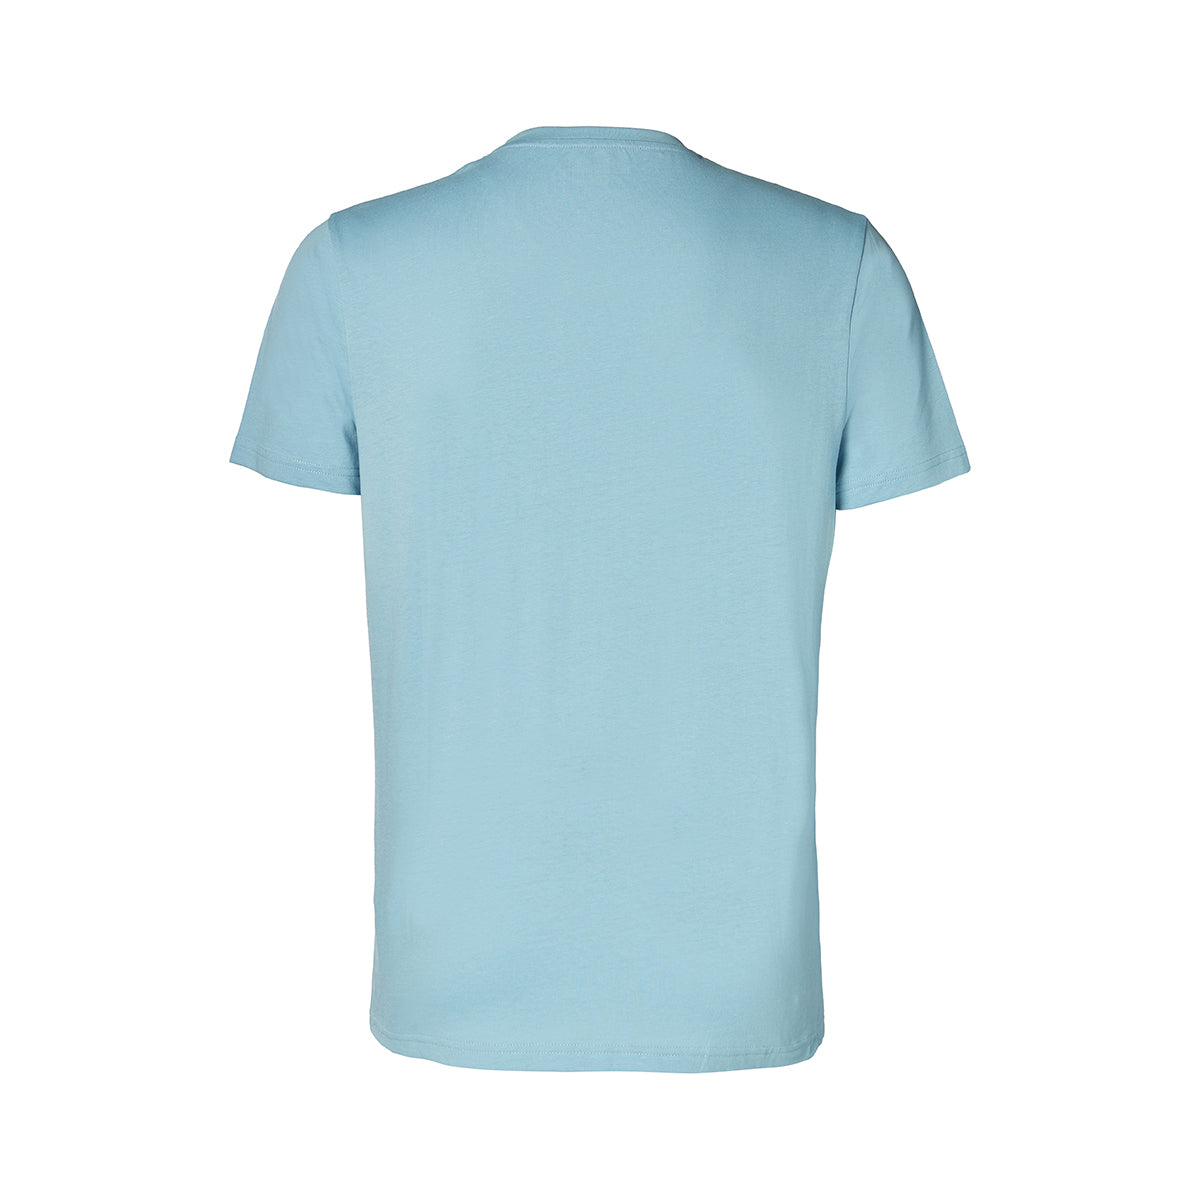 T-shirt Cromen Bleu Homme - Image 2